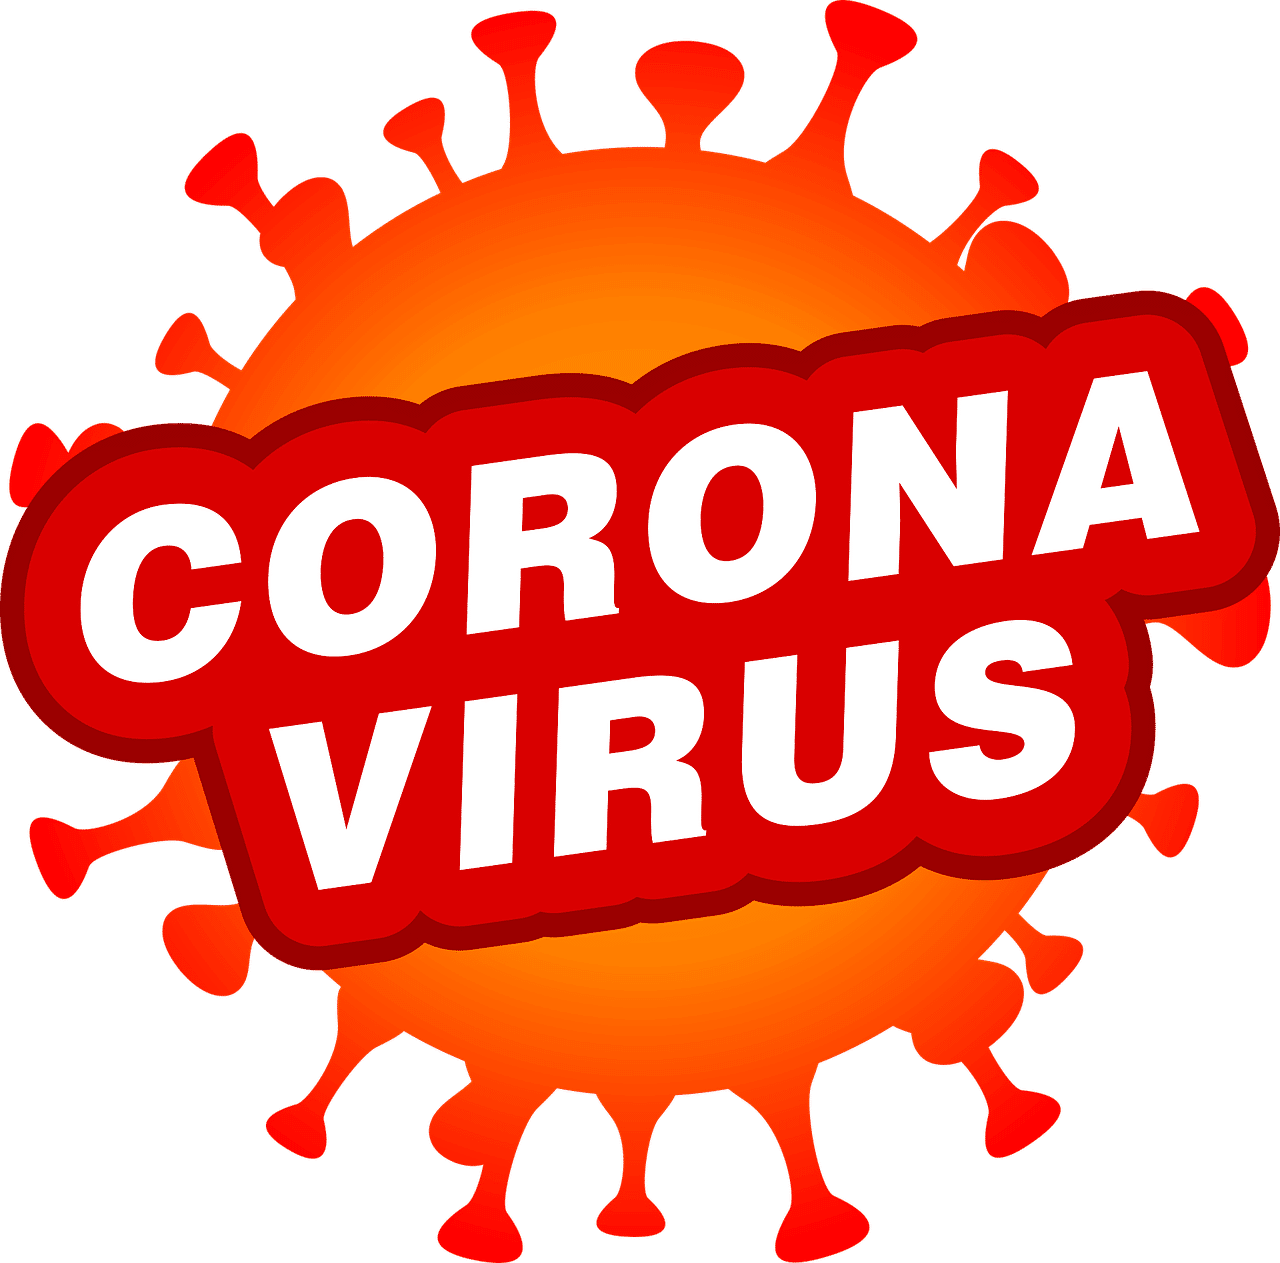 Darlington lie detector test, Coronavirus, infidelity